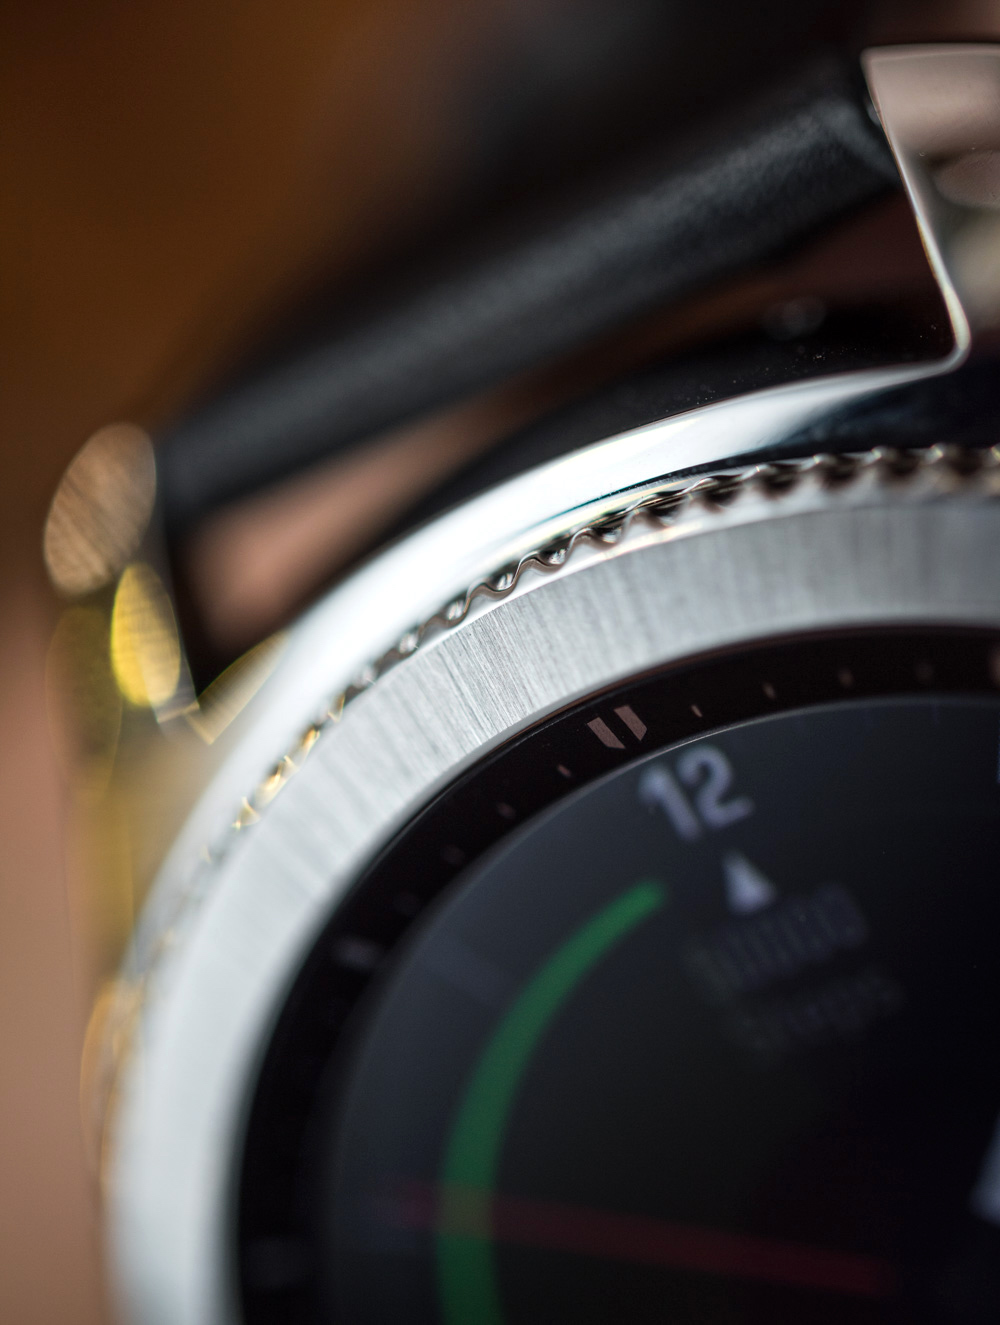 Samsung-Gear-S3-Frontier-Classic-smartwatch-review-aBlogtoWatch-9